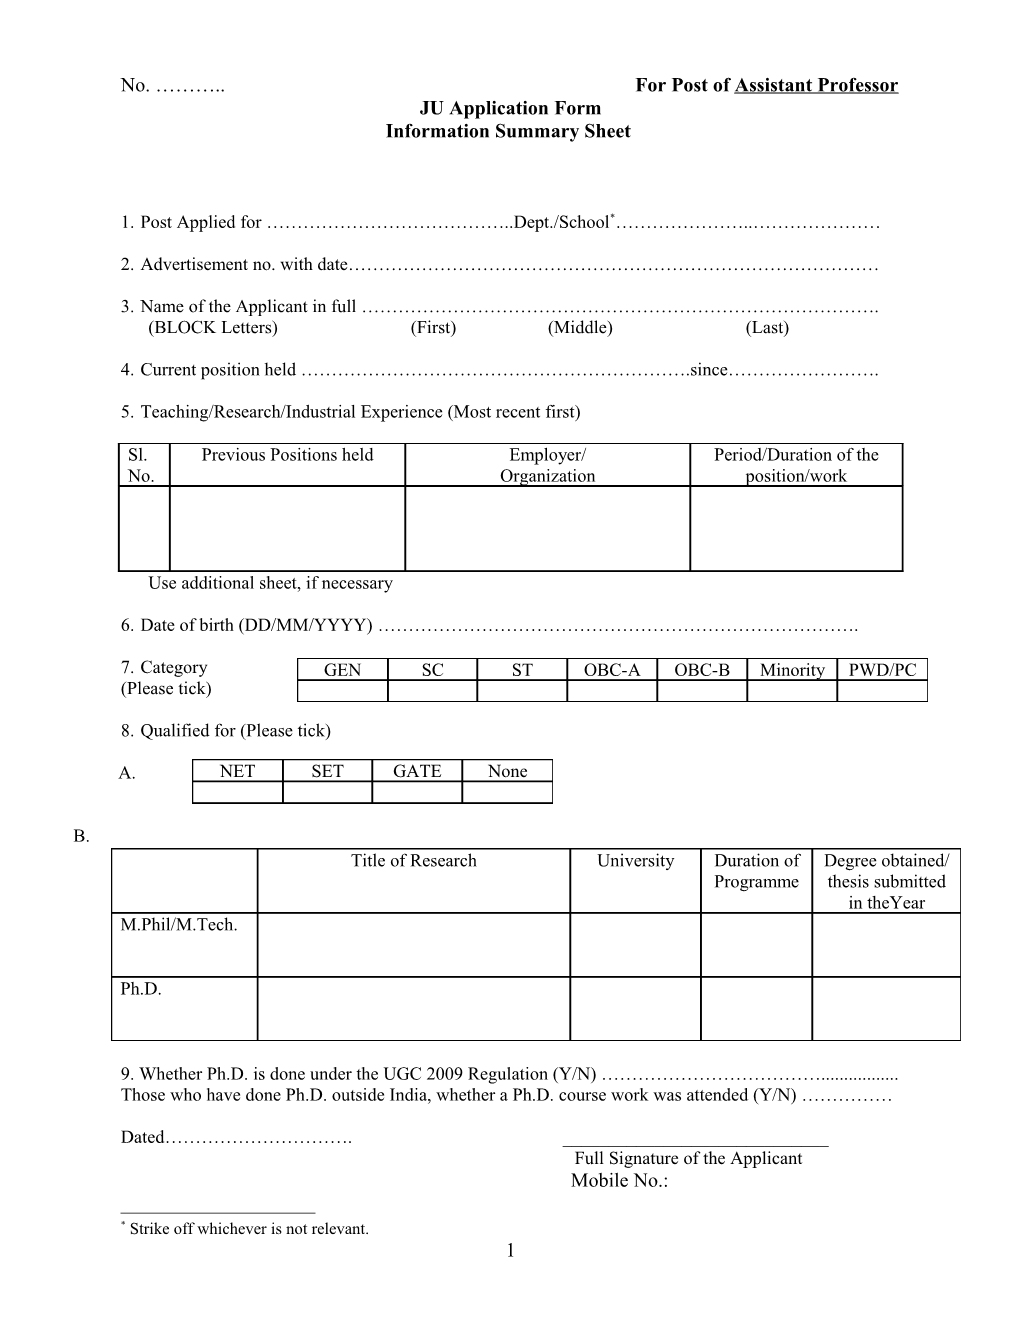 JU Application Form